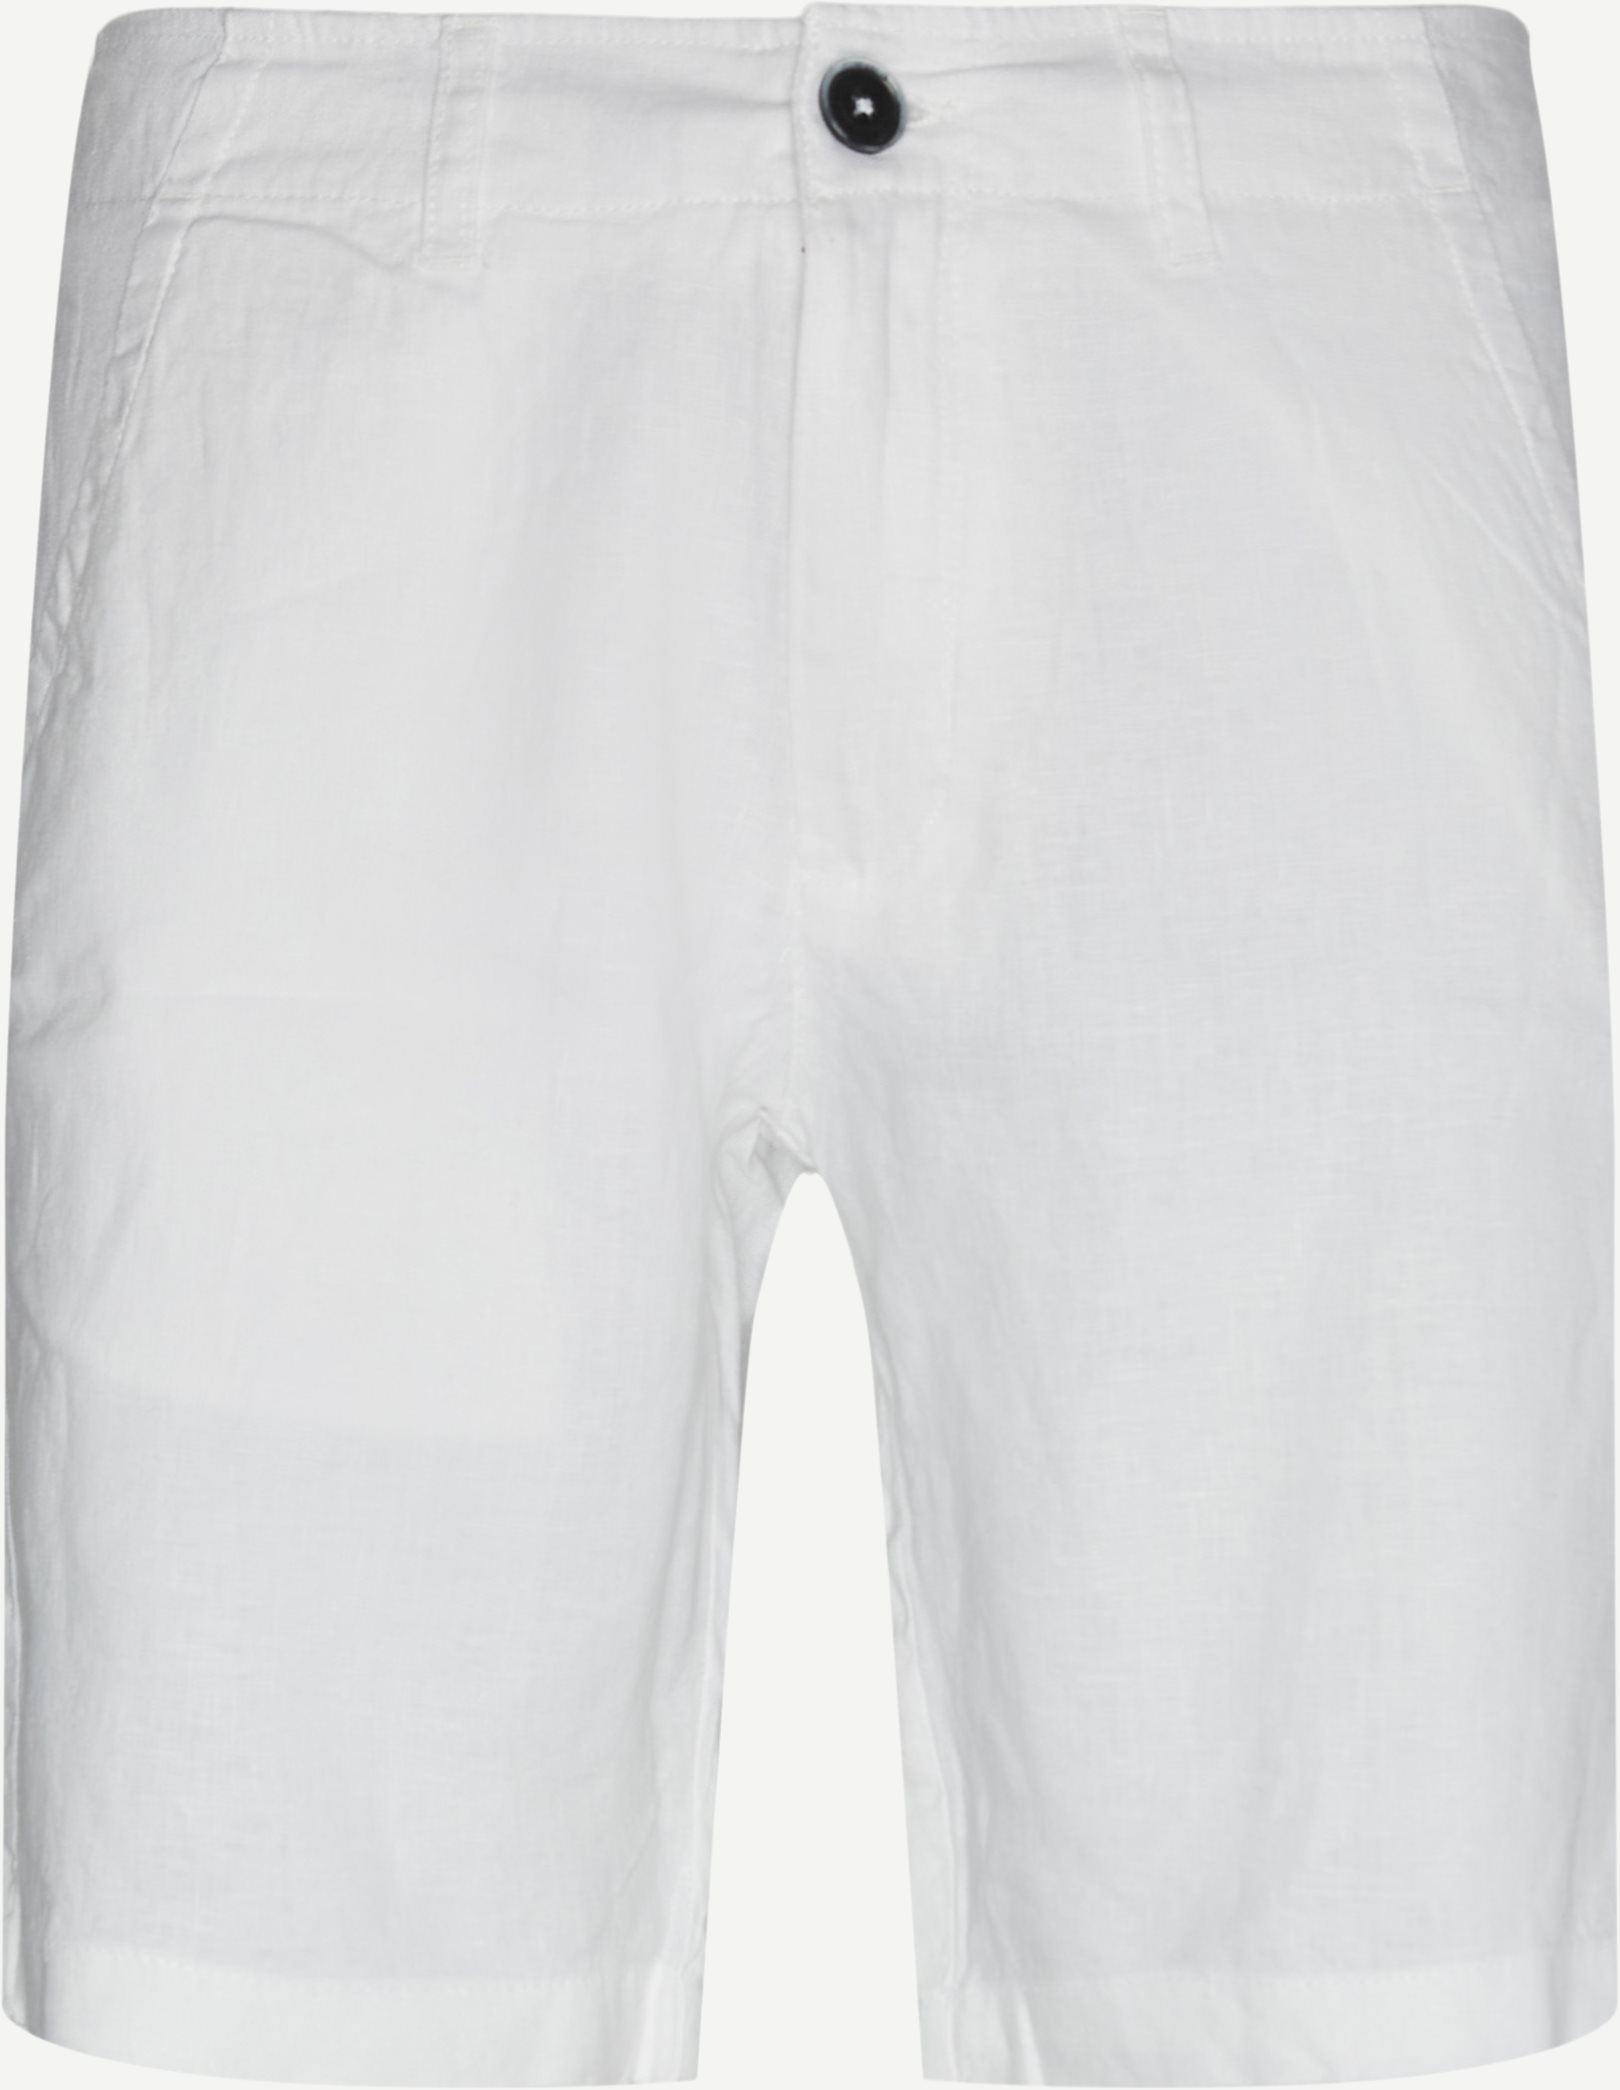 Mosby shorts - Shorts - Regular fit - Vit